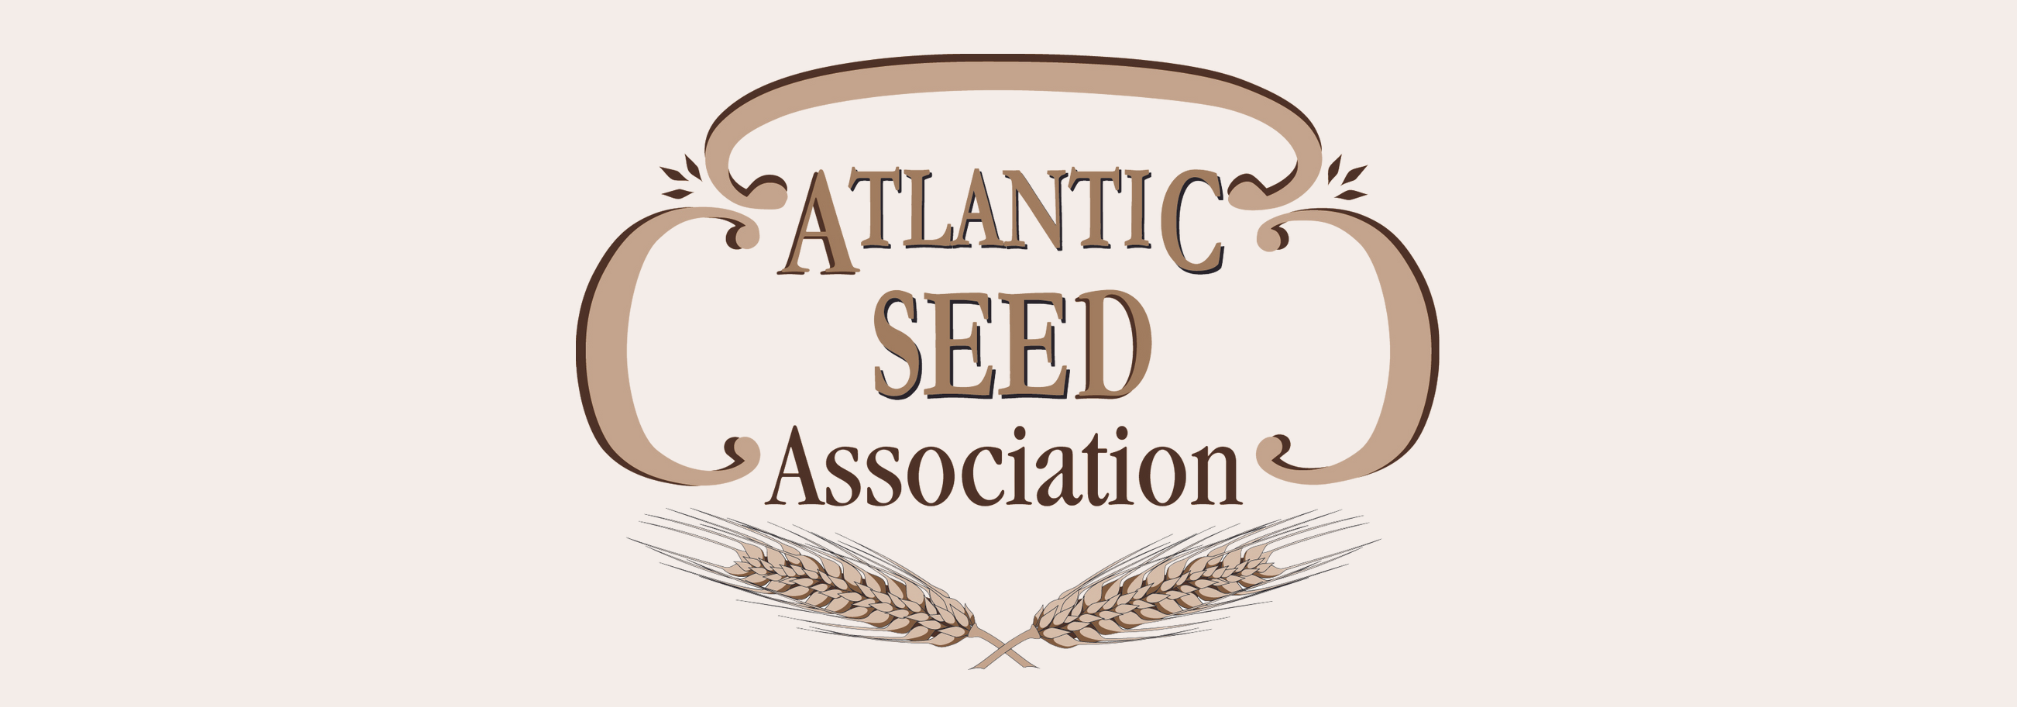 Atlantic Seed Association